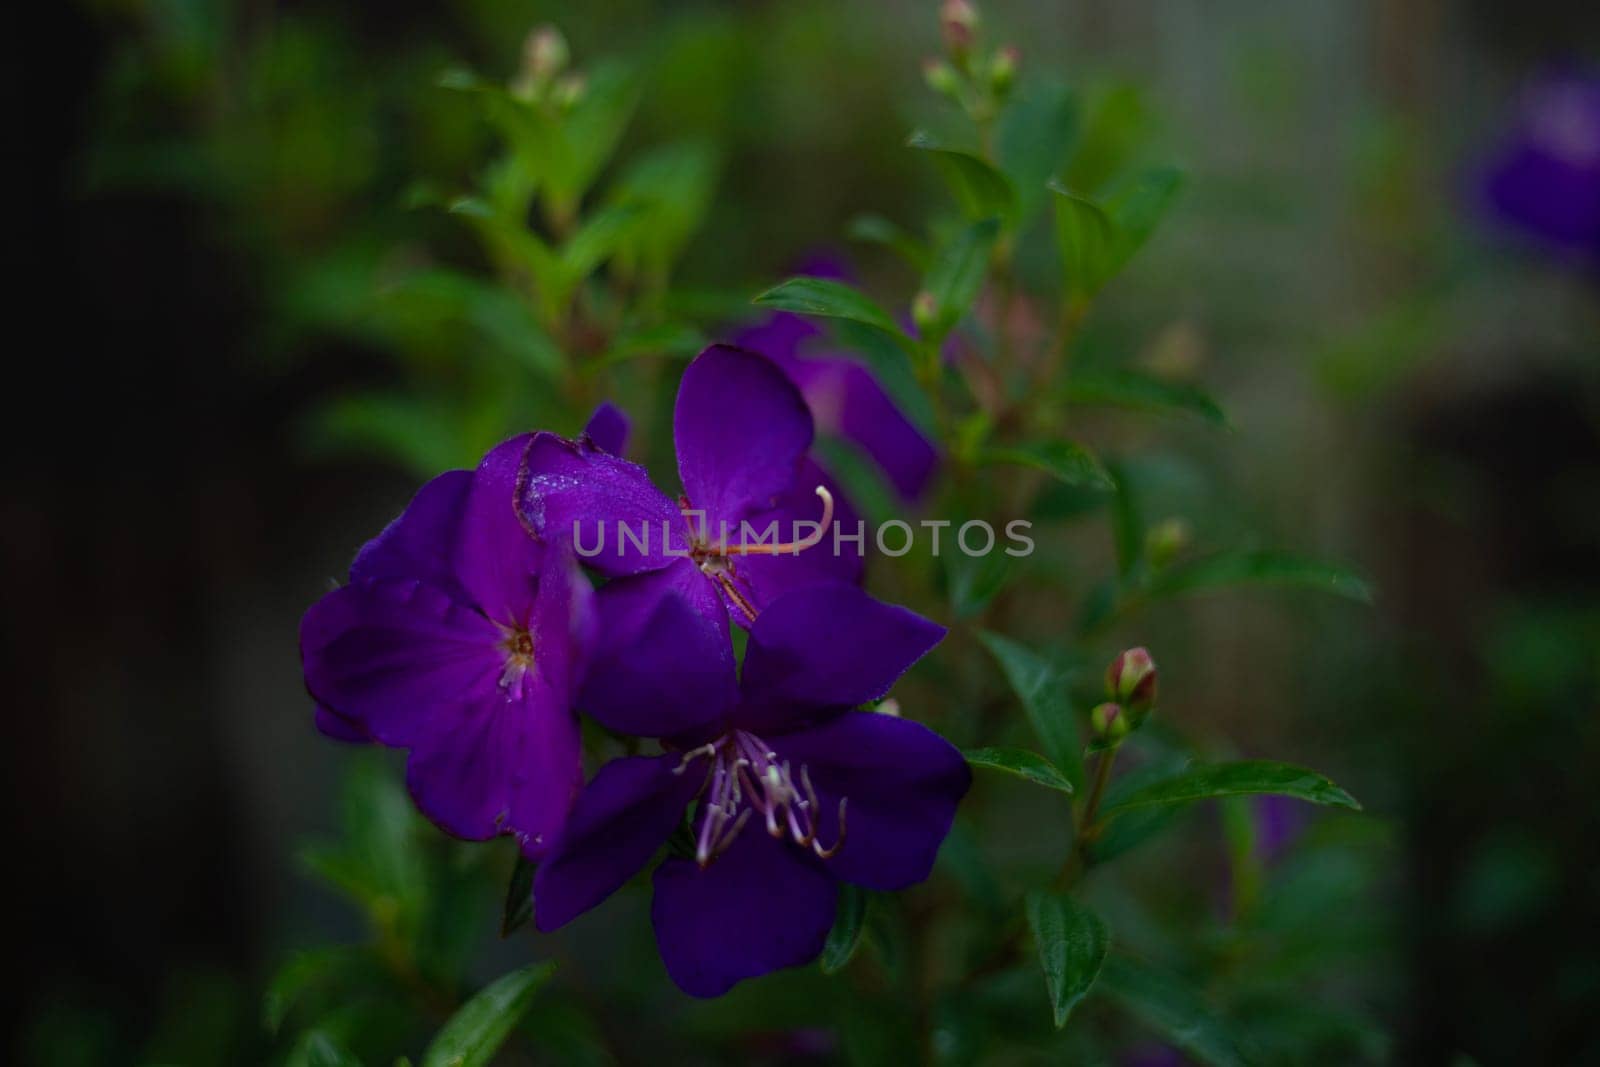 Little Purple Flower In The Garden by urzine